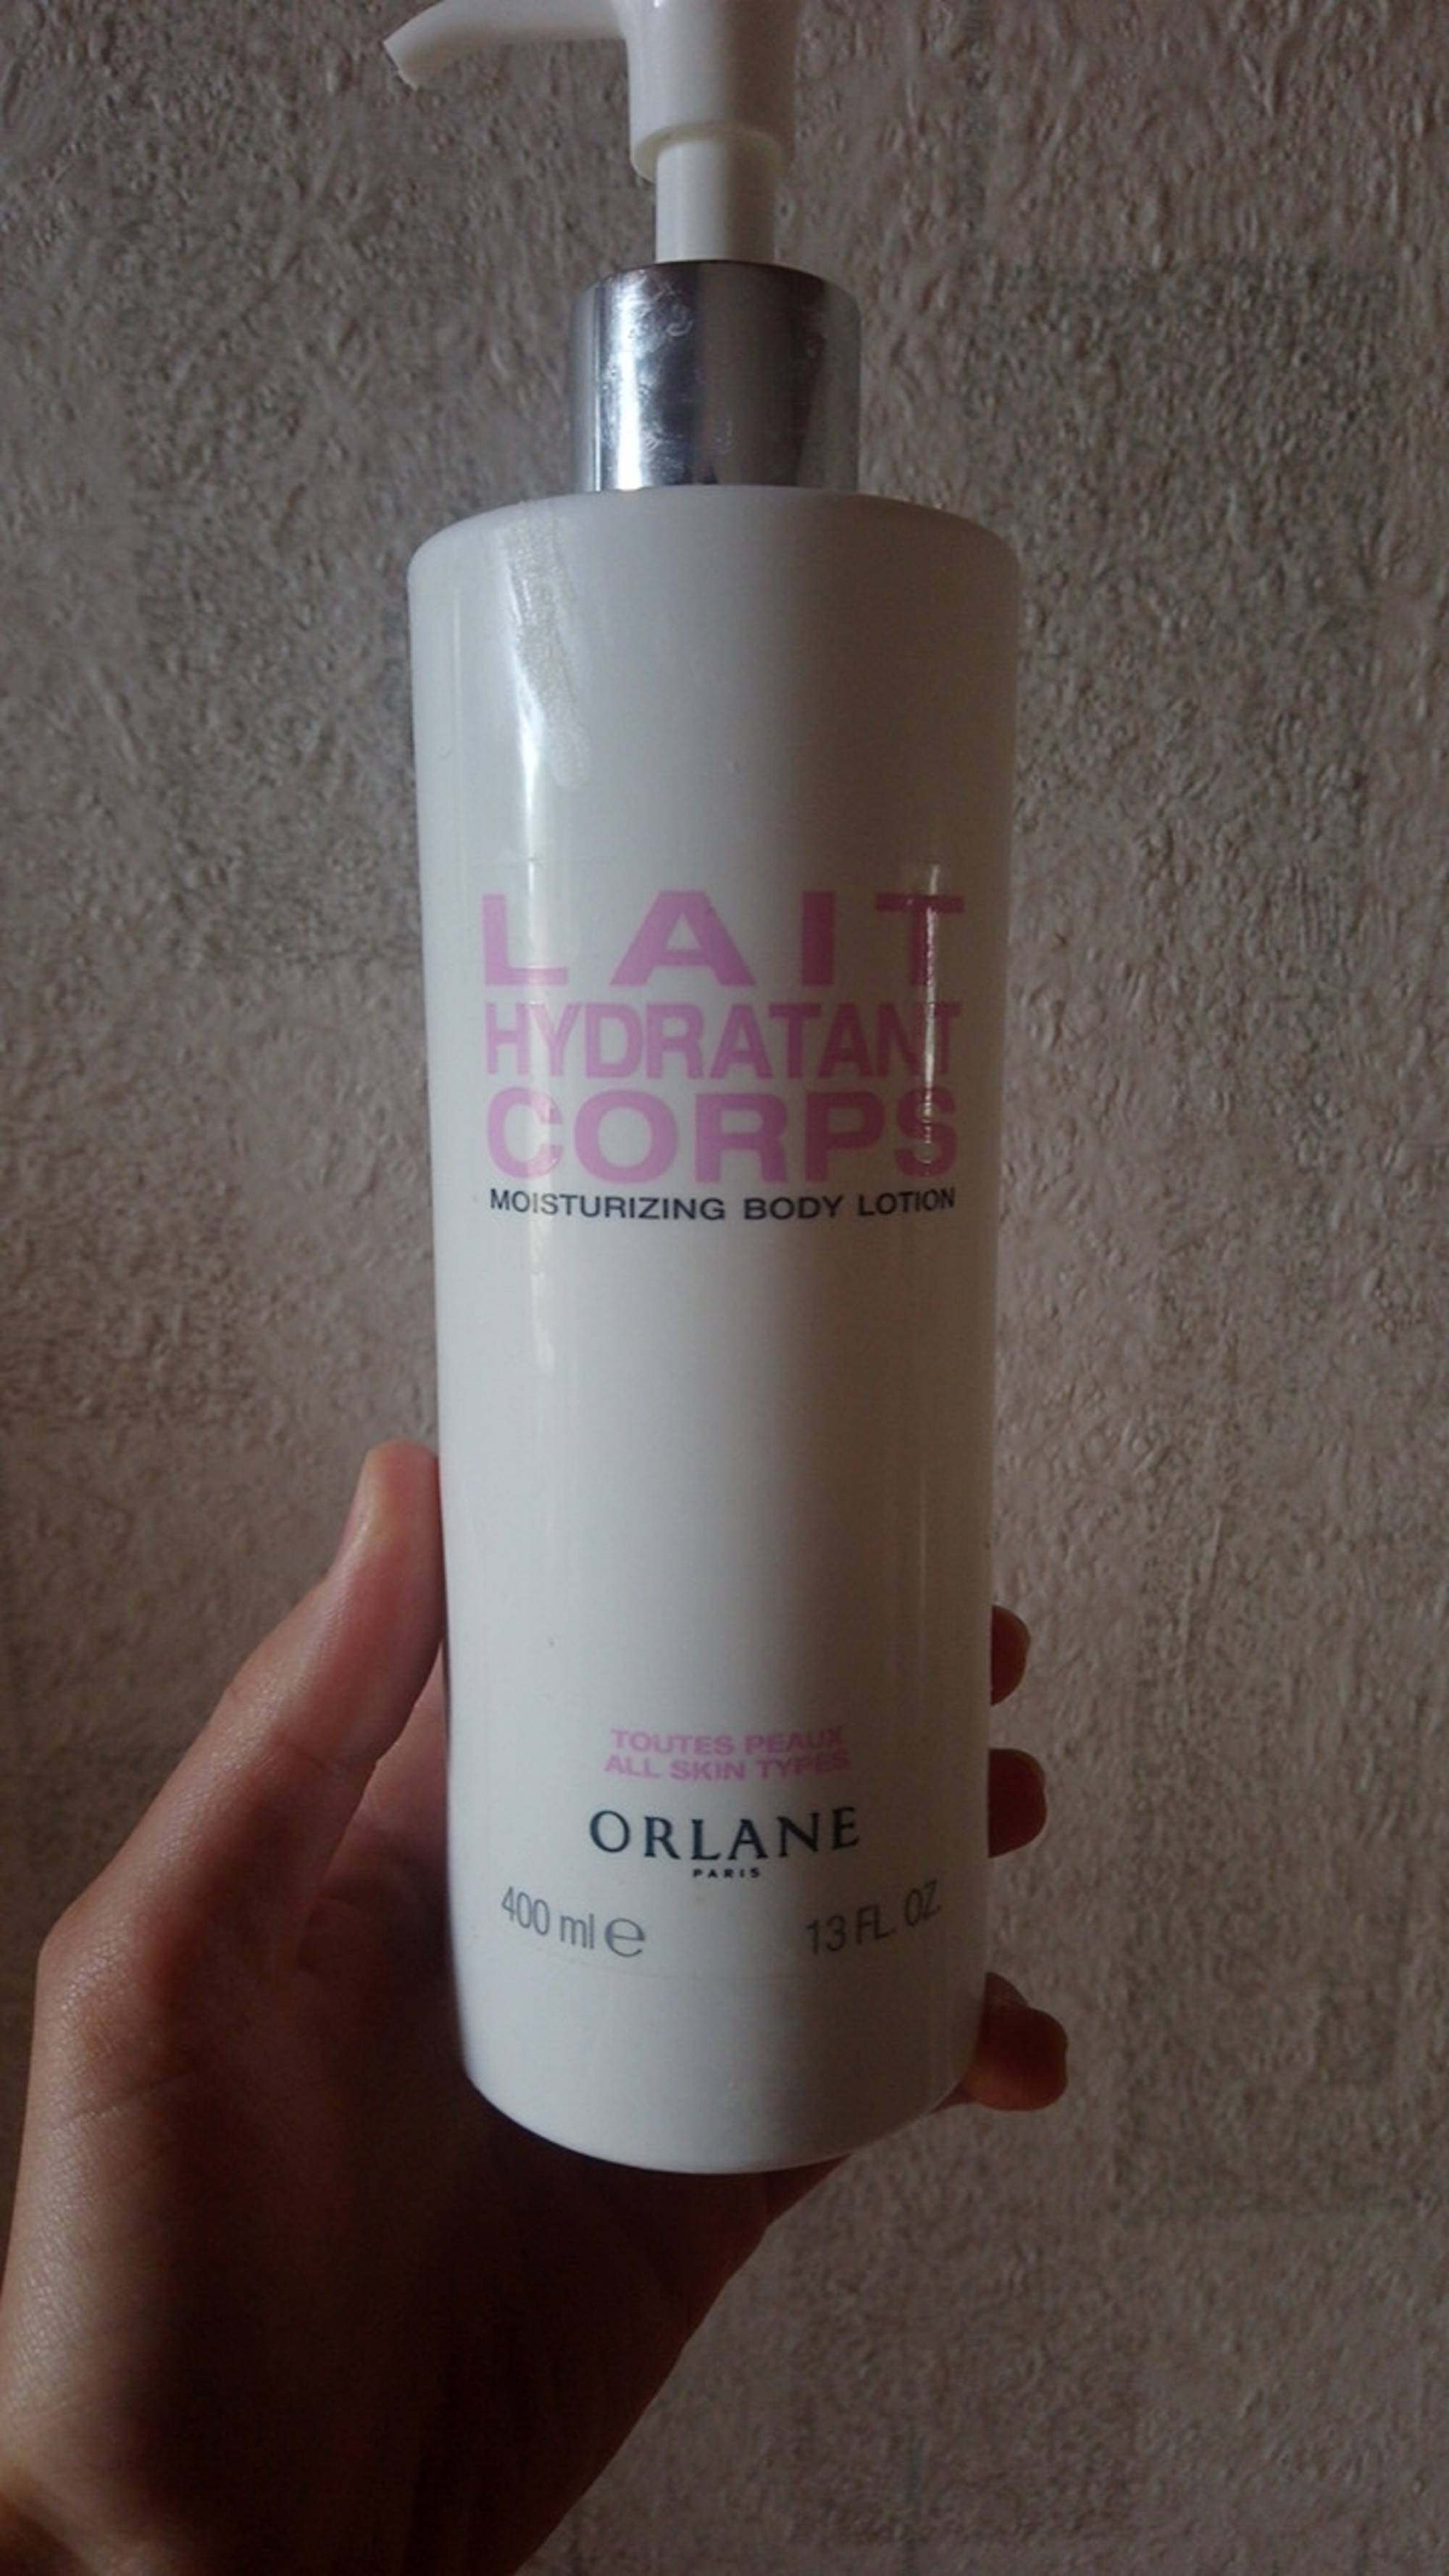 ORLANE - Lait hydratant corps